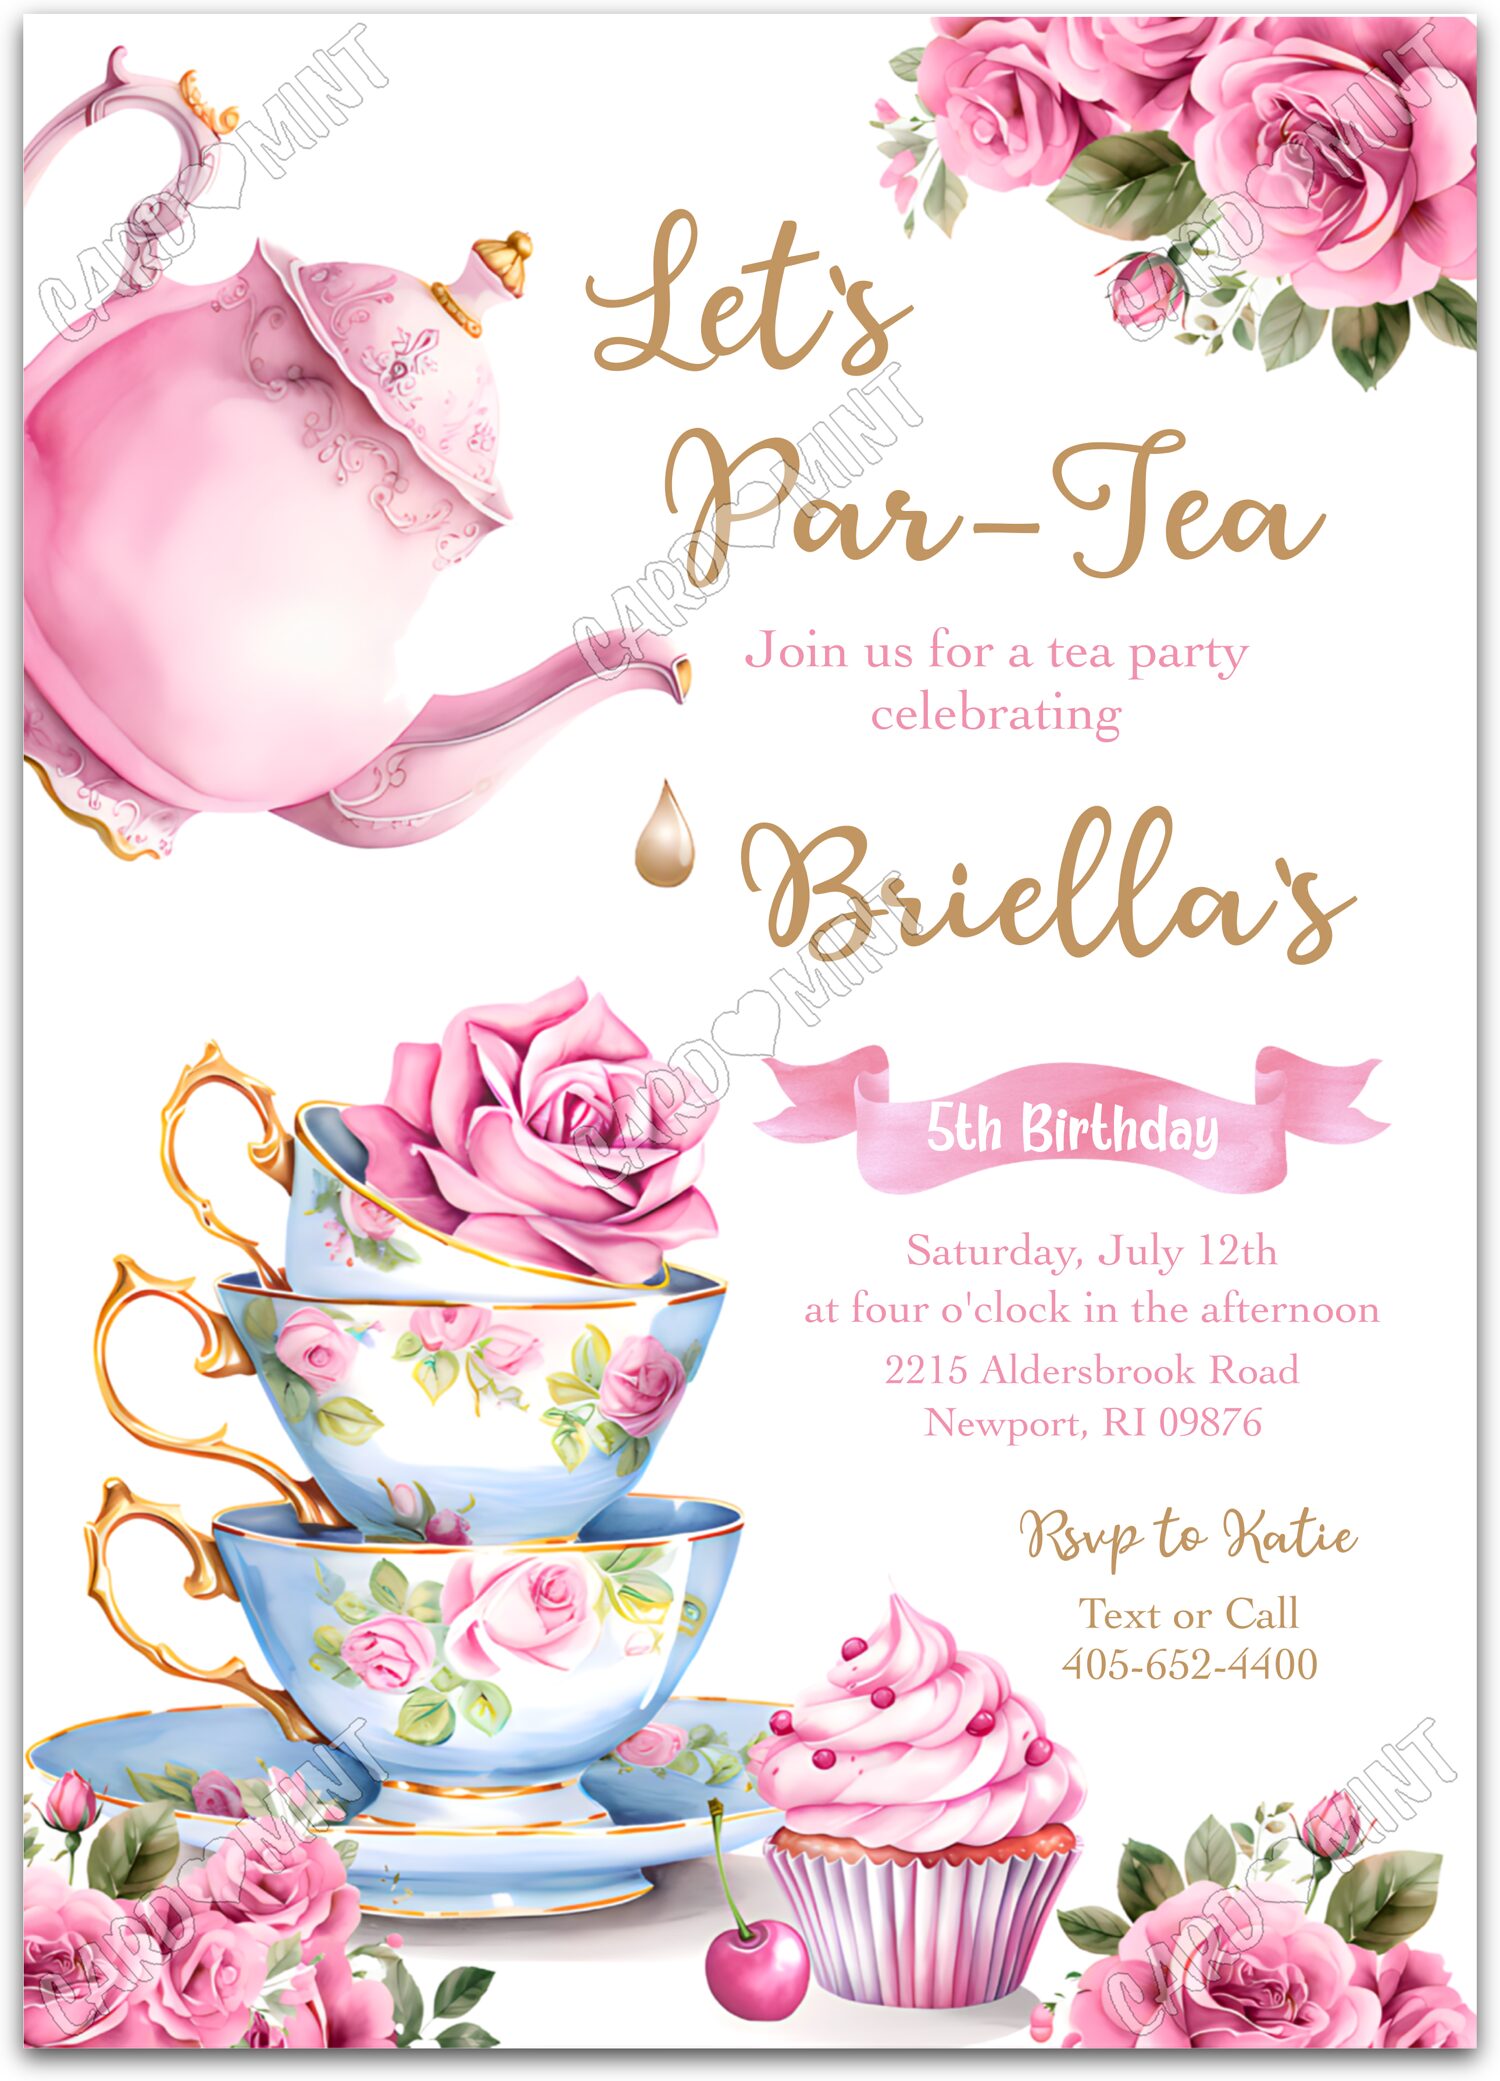 Editable Let's Par-tea pink teacups & roses girl Tea Party Birthday Party 5"x7" Invitation EV1209